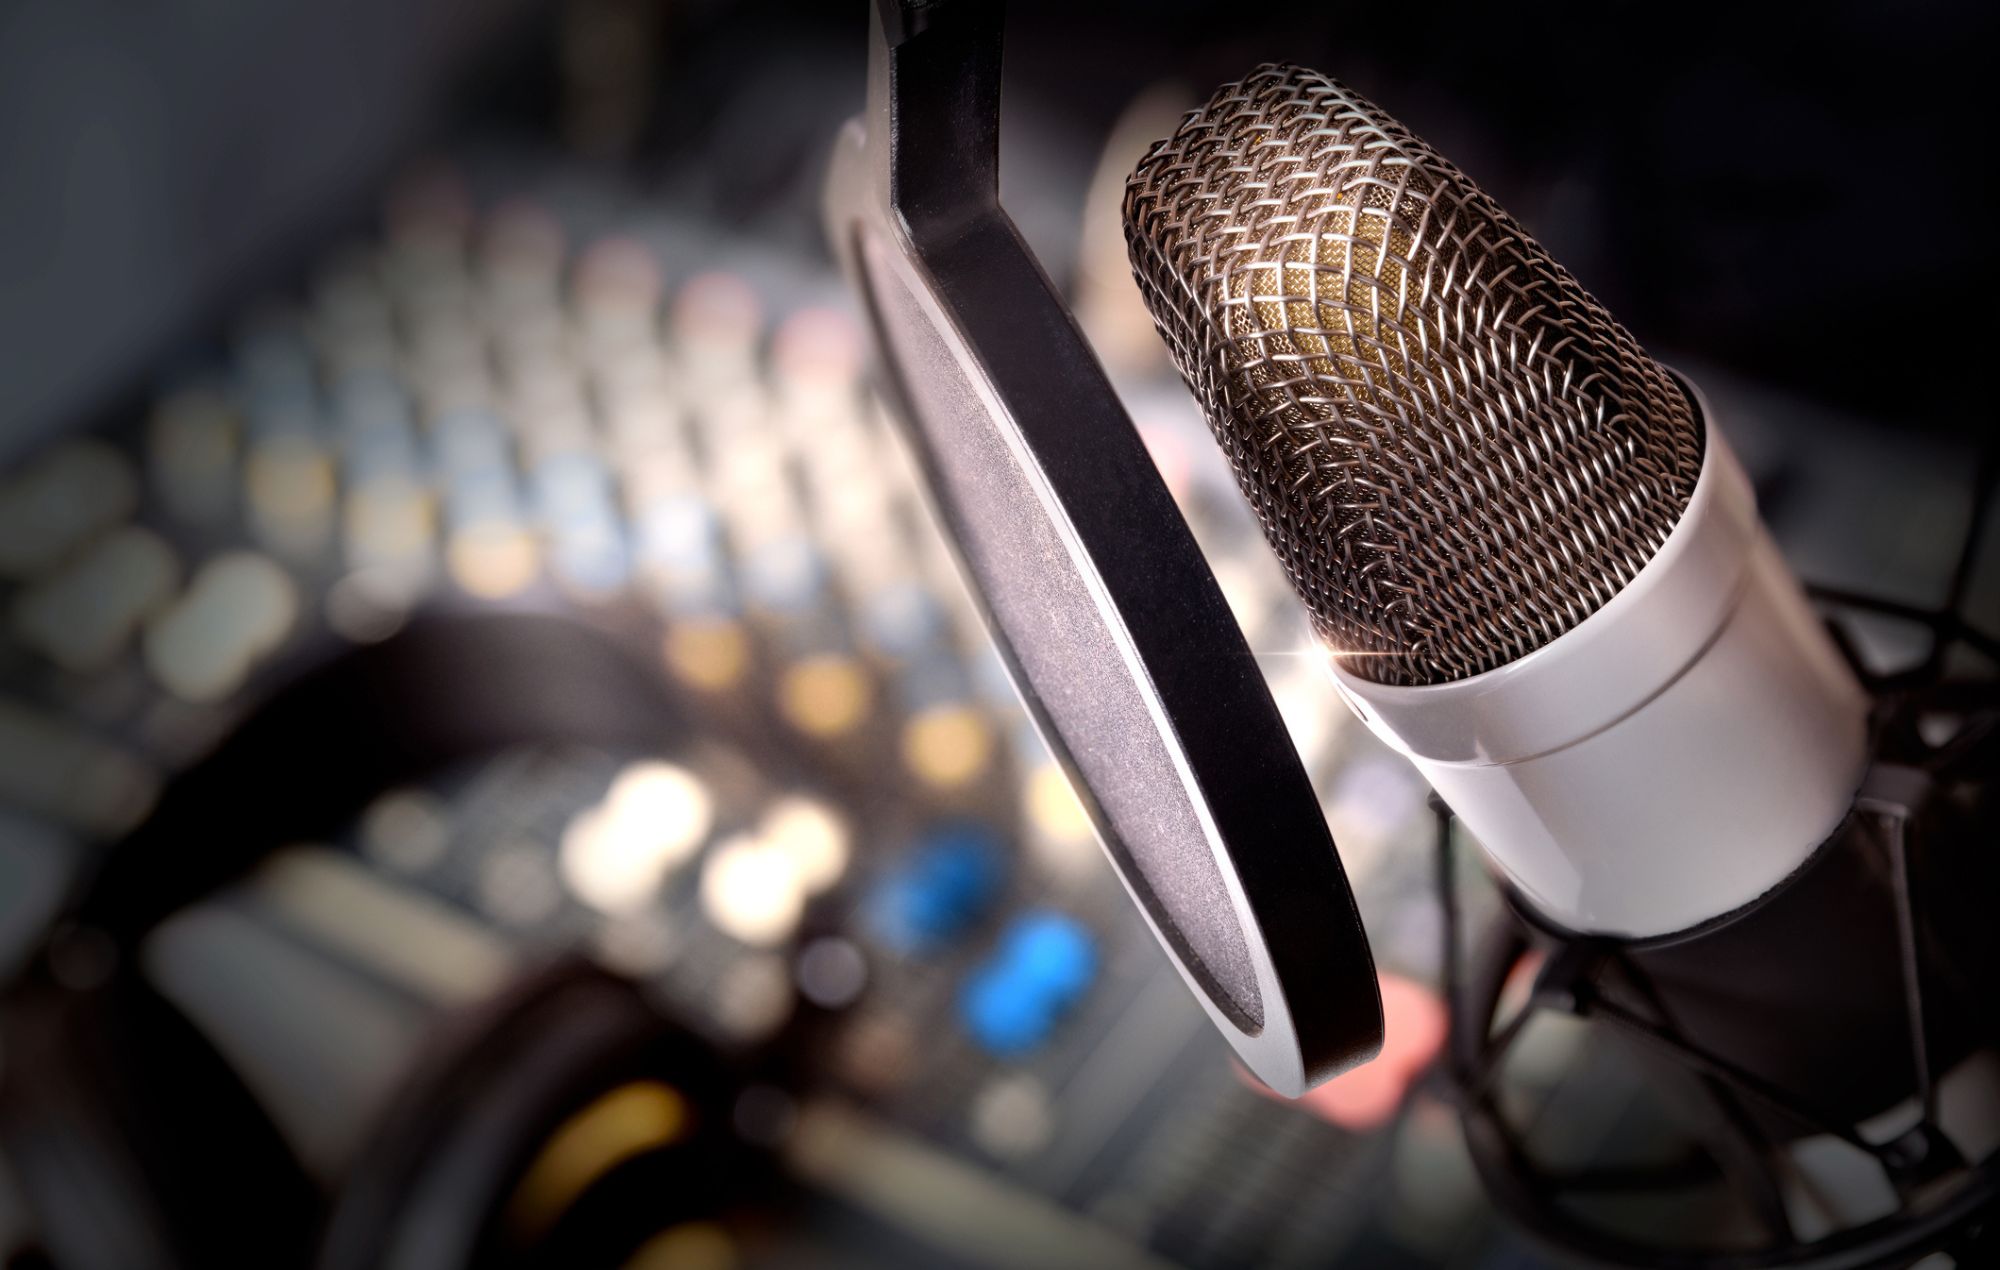 Recording equipment in studio. Studio microphone with headphones and mixer background. Elevated view